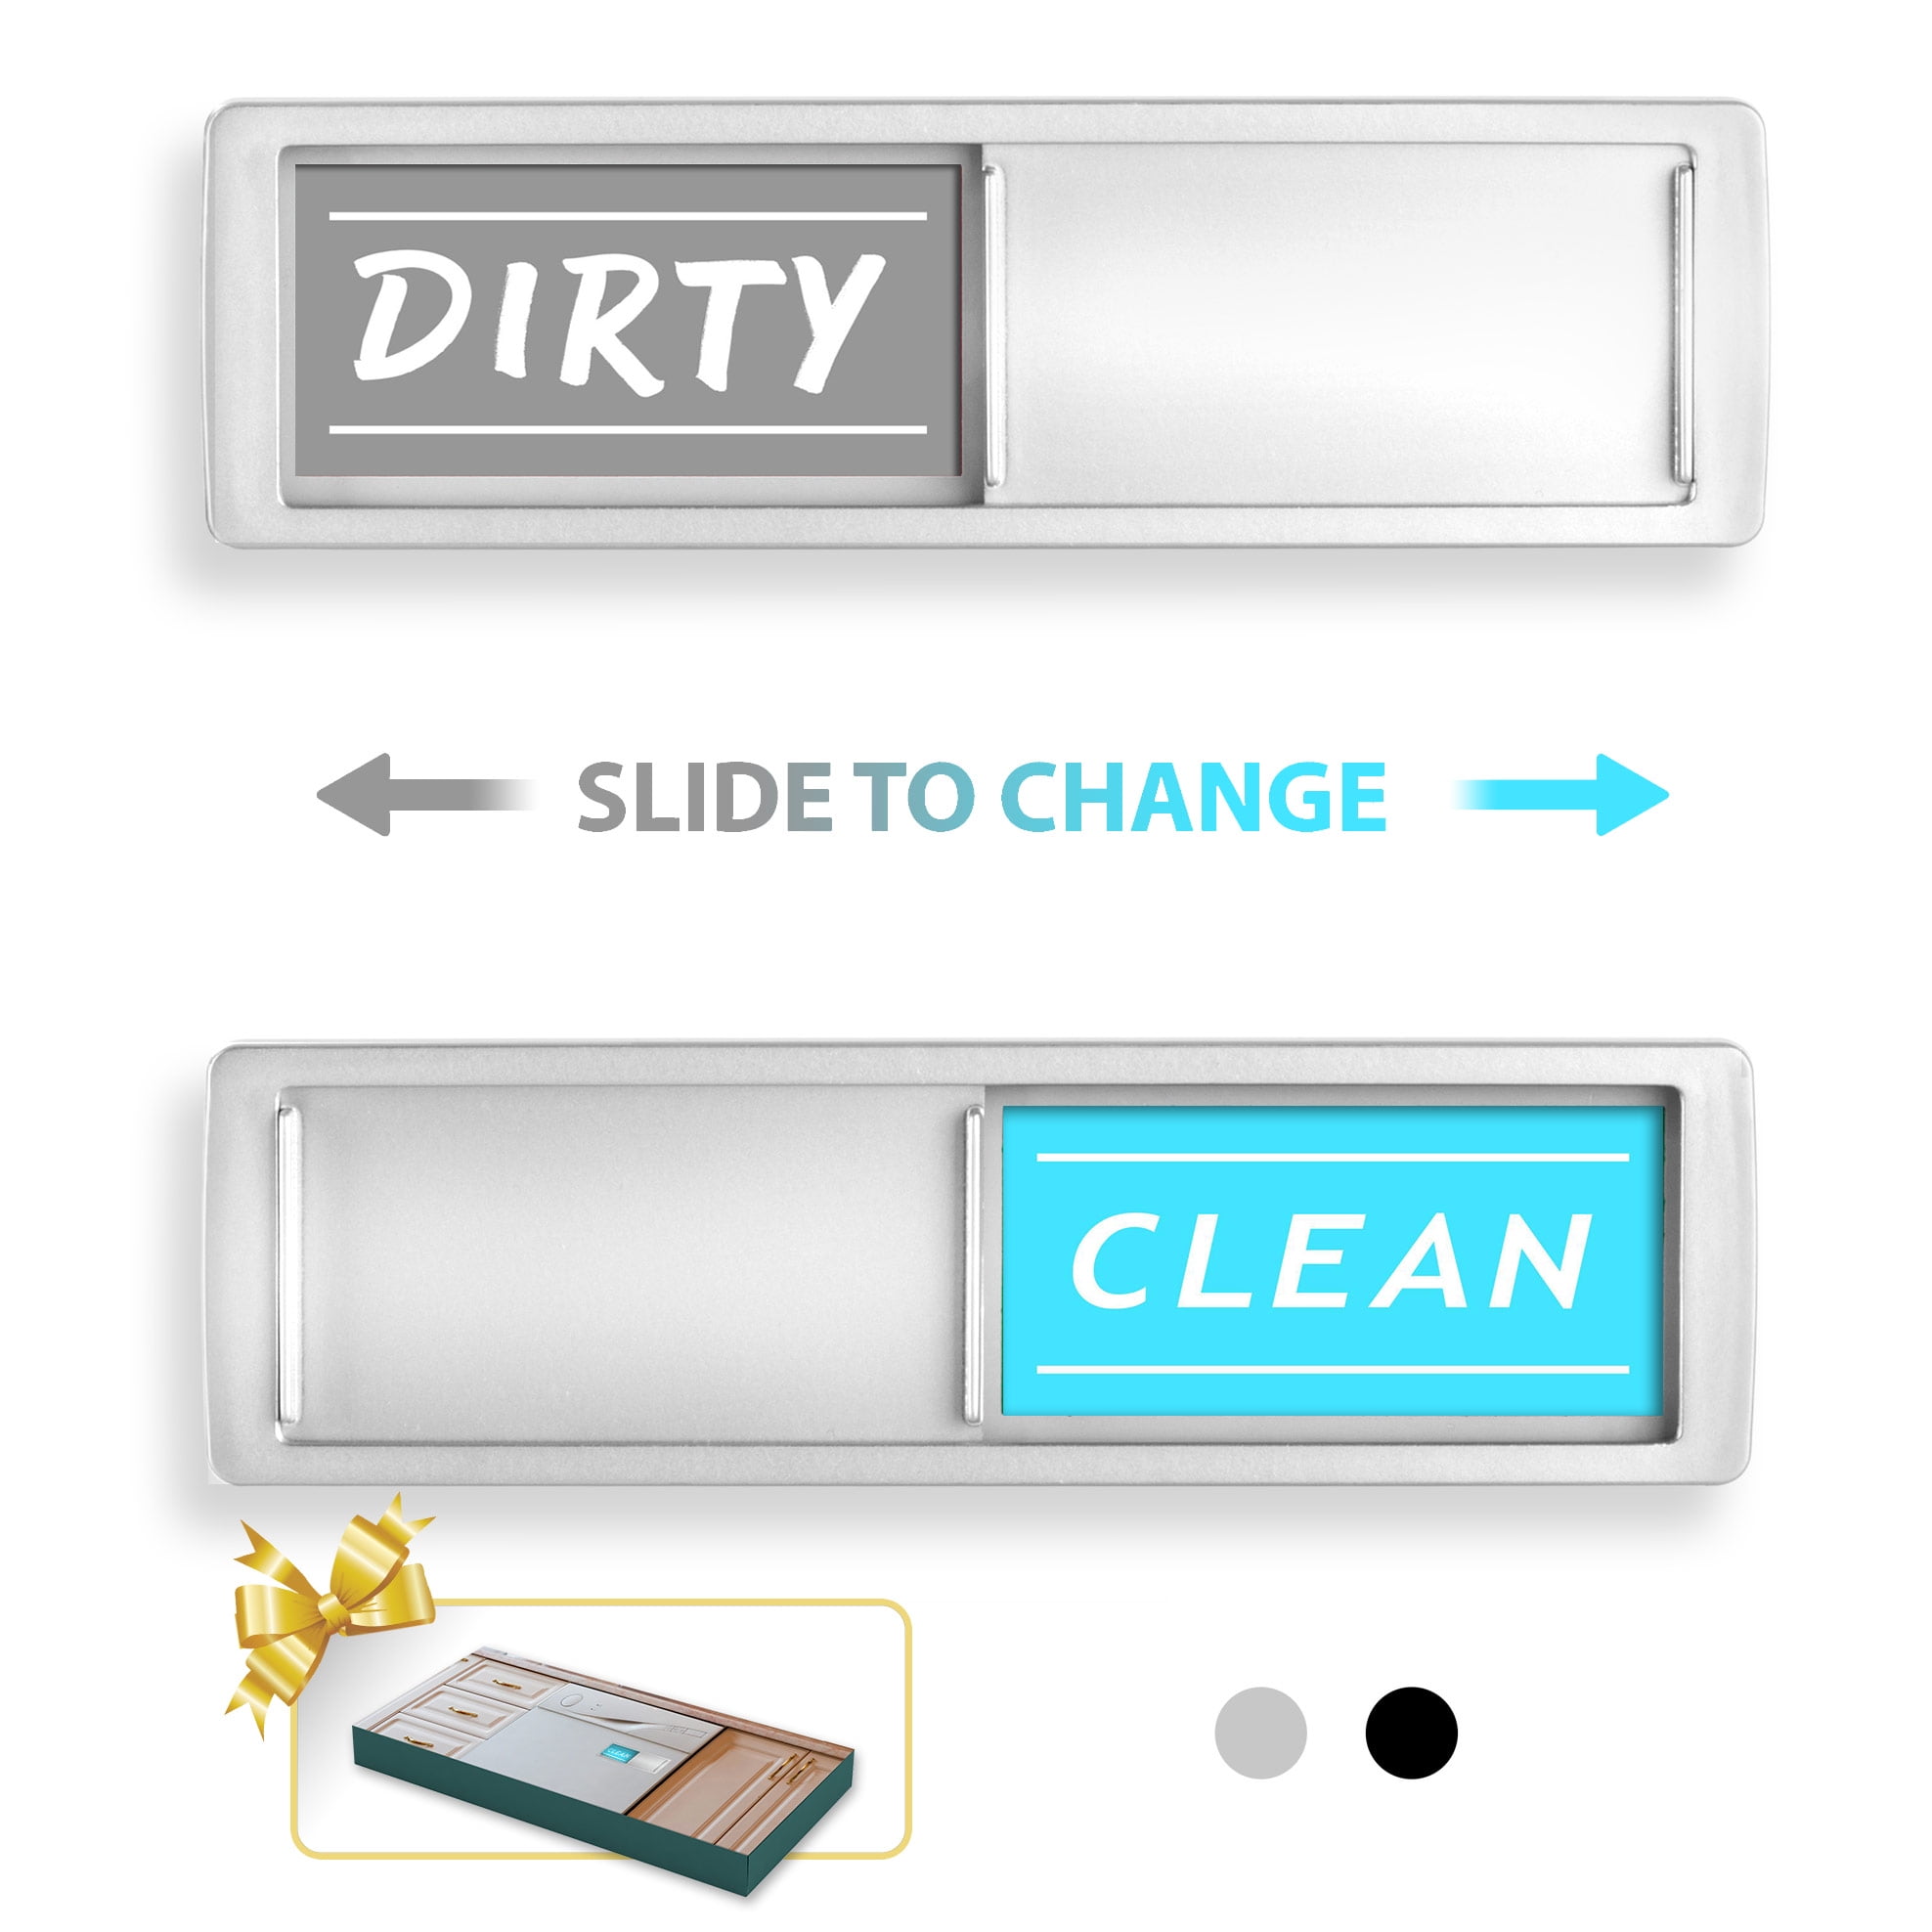 Details about   Dishwasher Clean Dirty Sign Magnetic Stick On Sliding Indicator Pukkr 